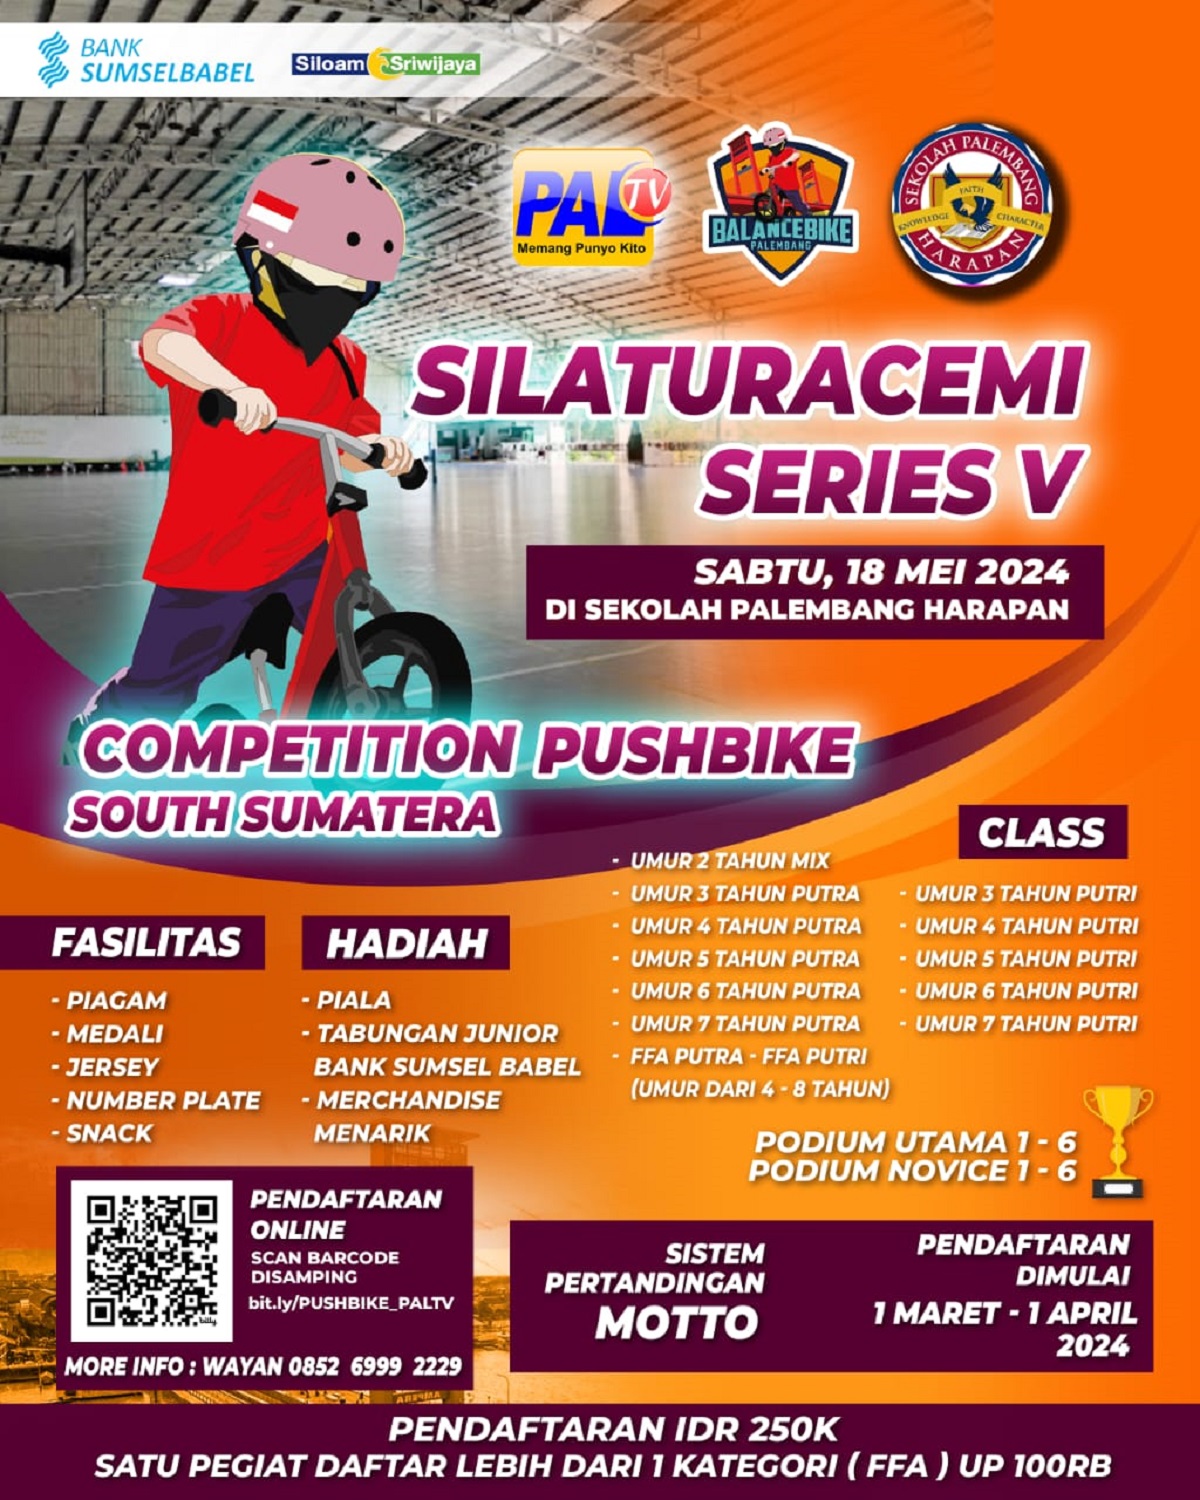 PALTV Gelar Juara Seri Silaturacemi V Kompetisi Sepeda Balap Sumatera Selatan 2024